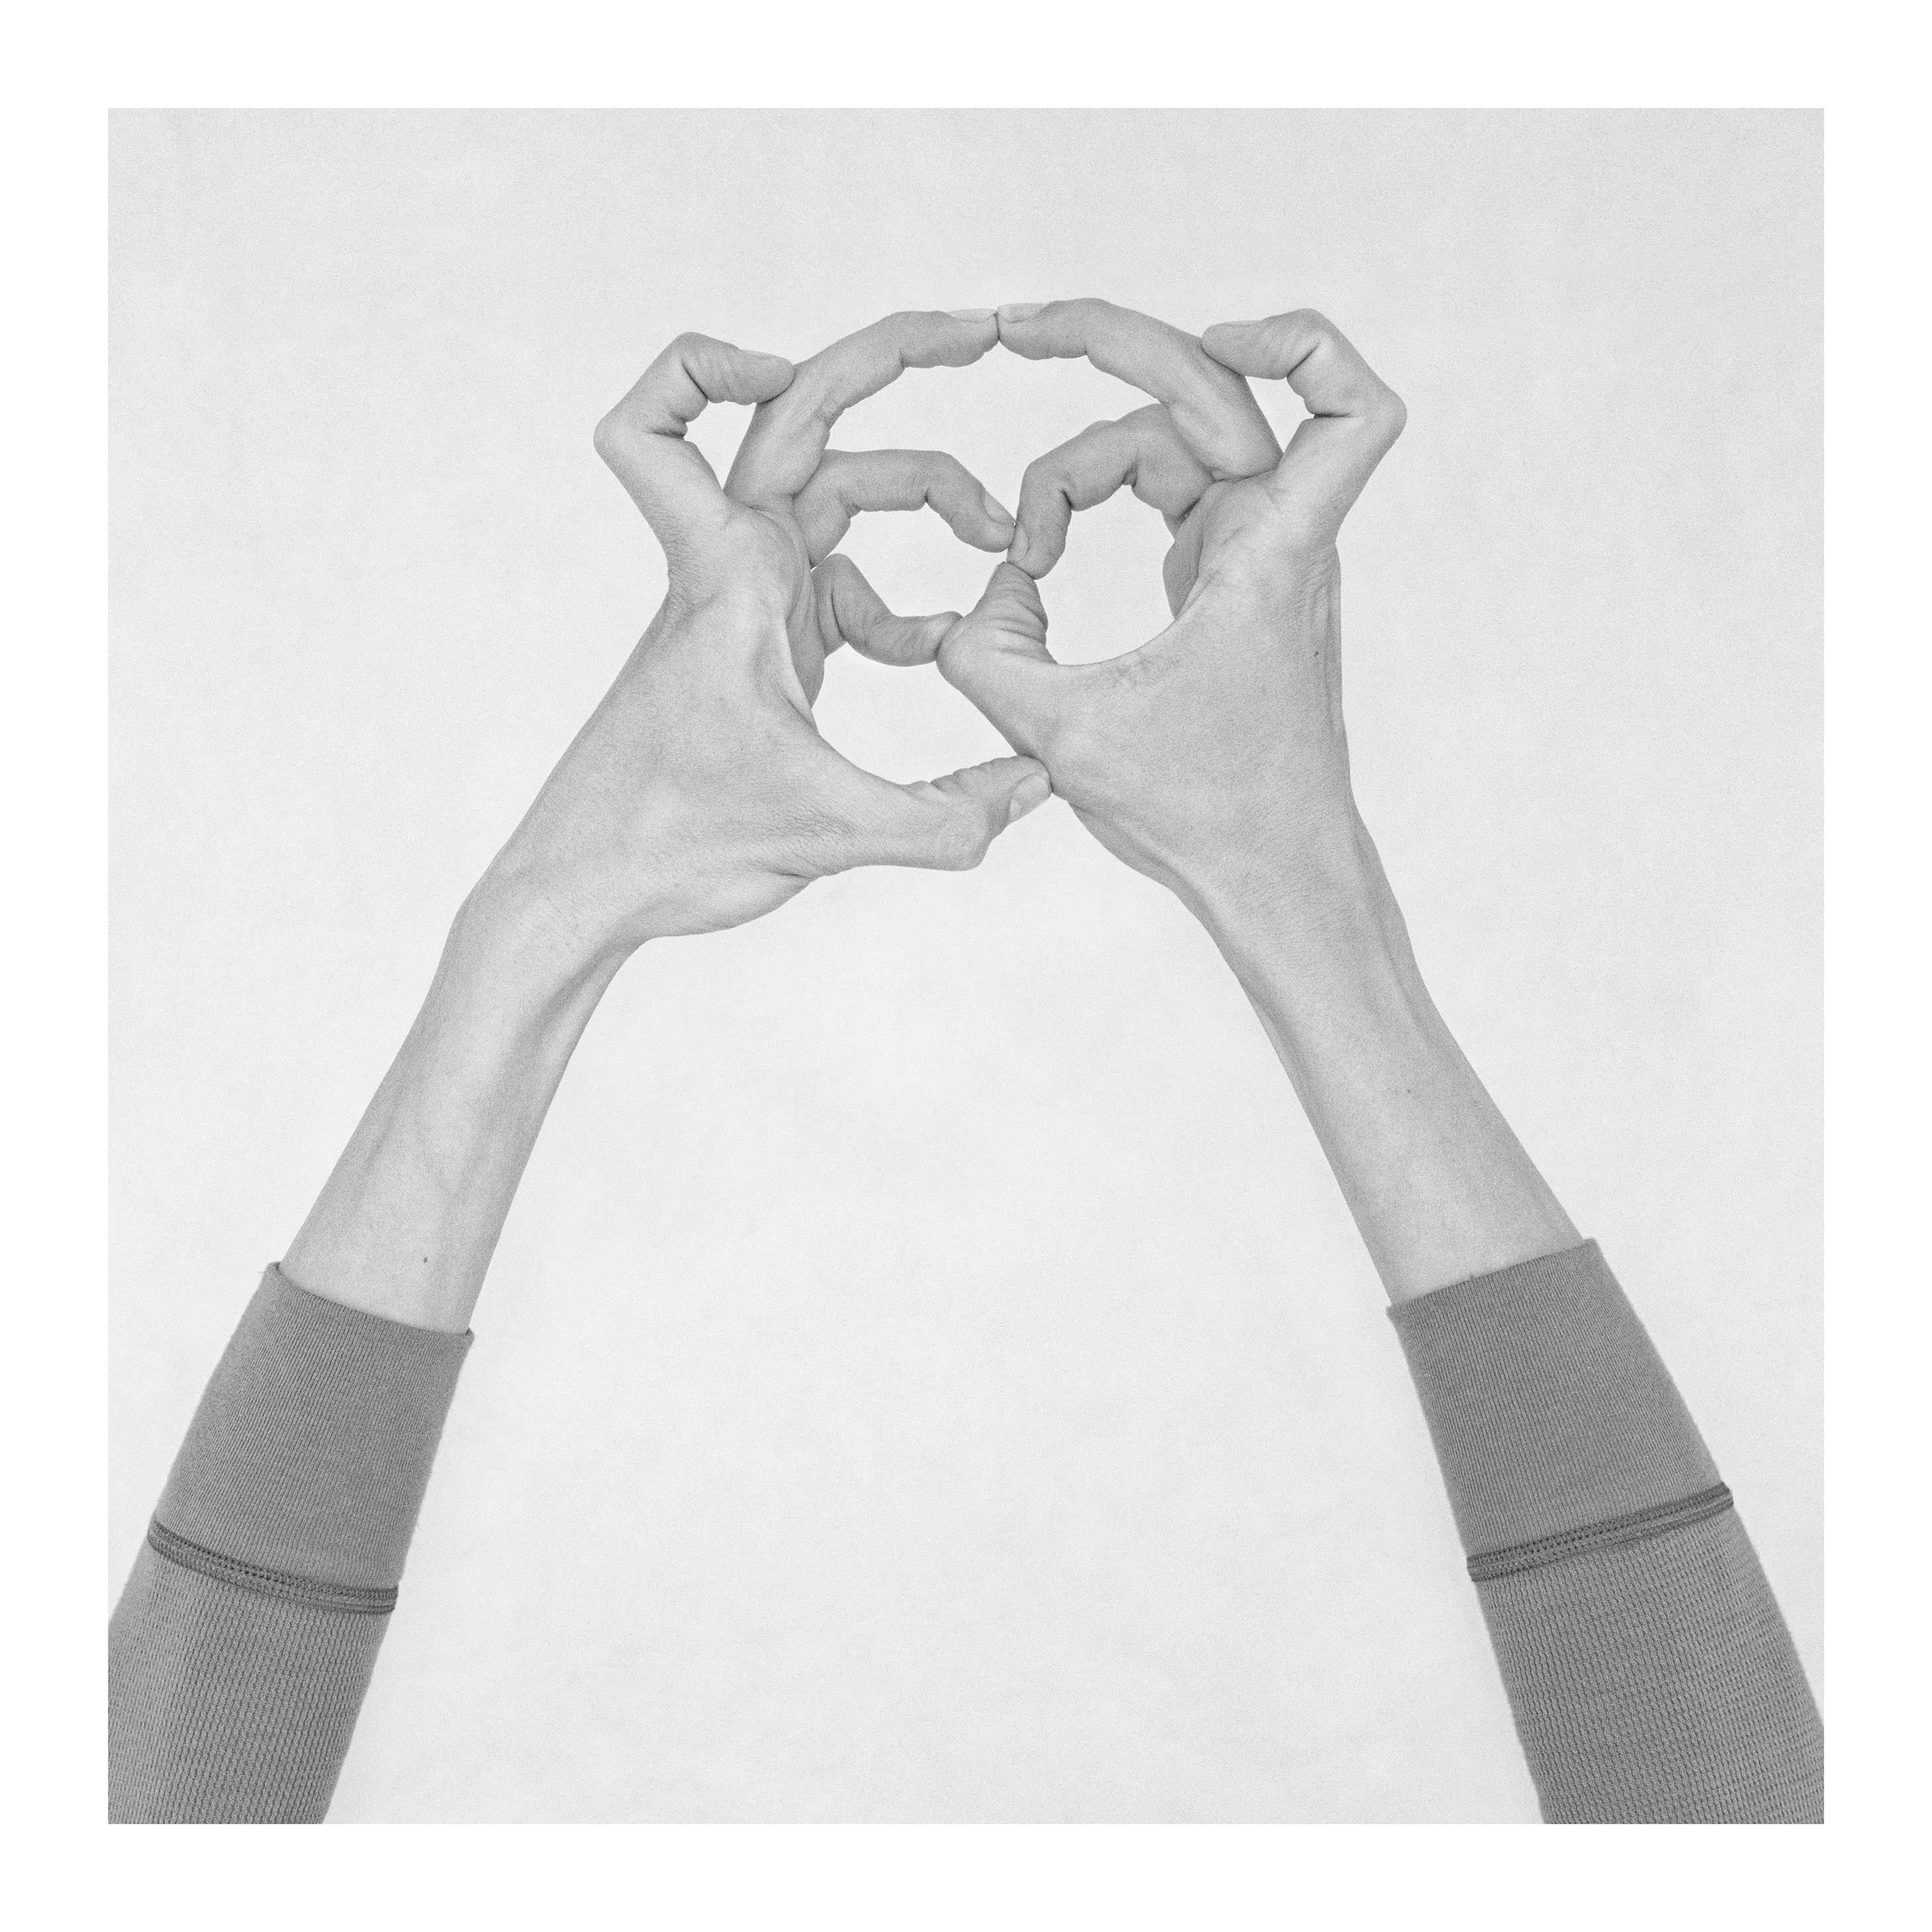 Untitled X, Untitled XXXIX, and Untitled XXIX, Hands. Triptych - Aesthetic Movement Photograph by Nico Baixas / Gos-com-fuig